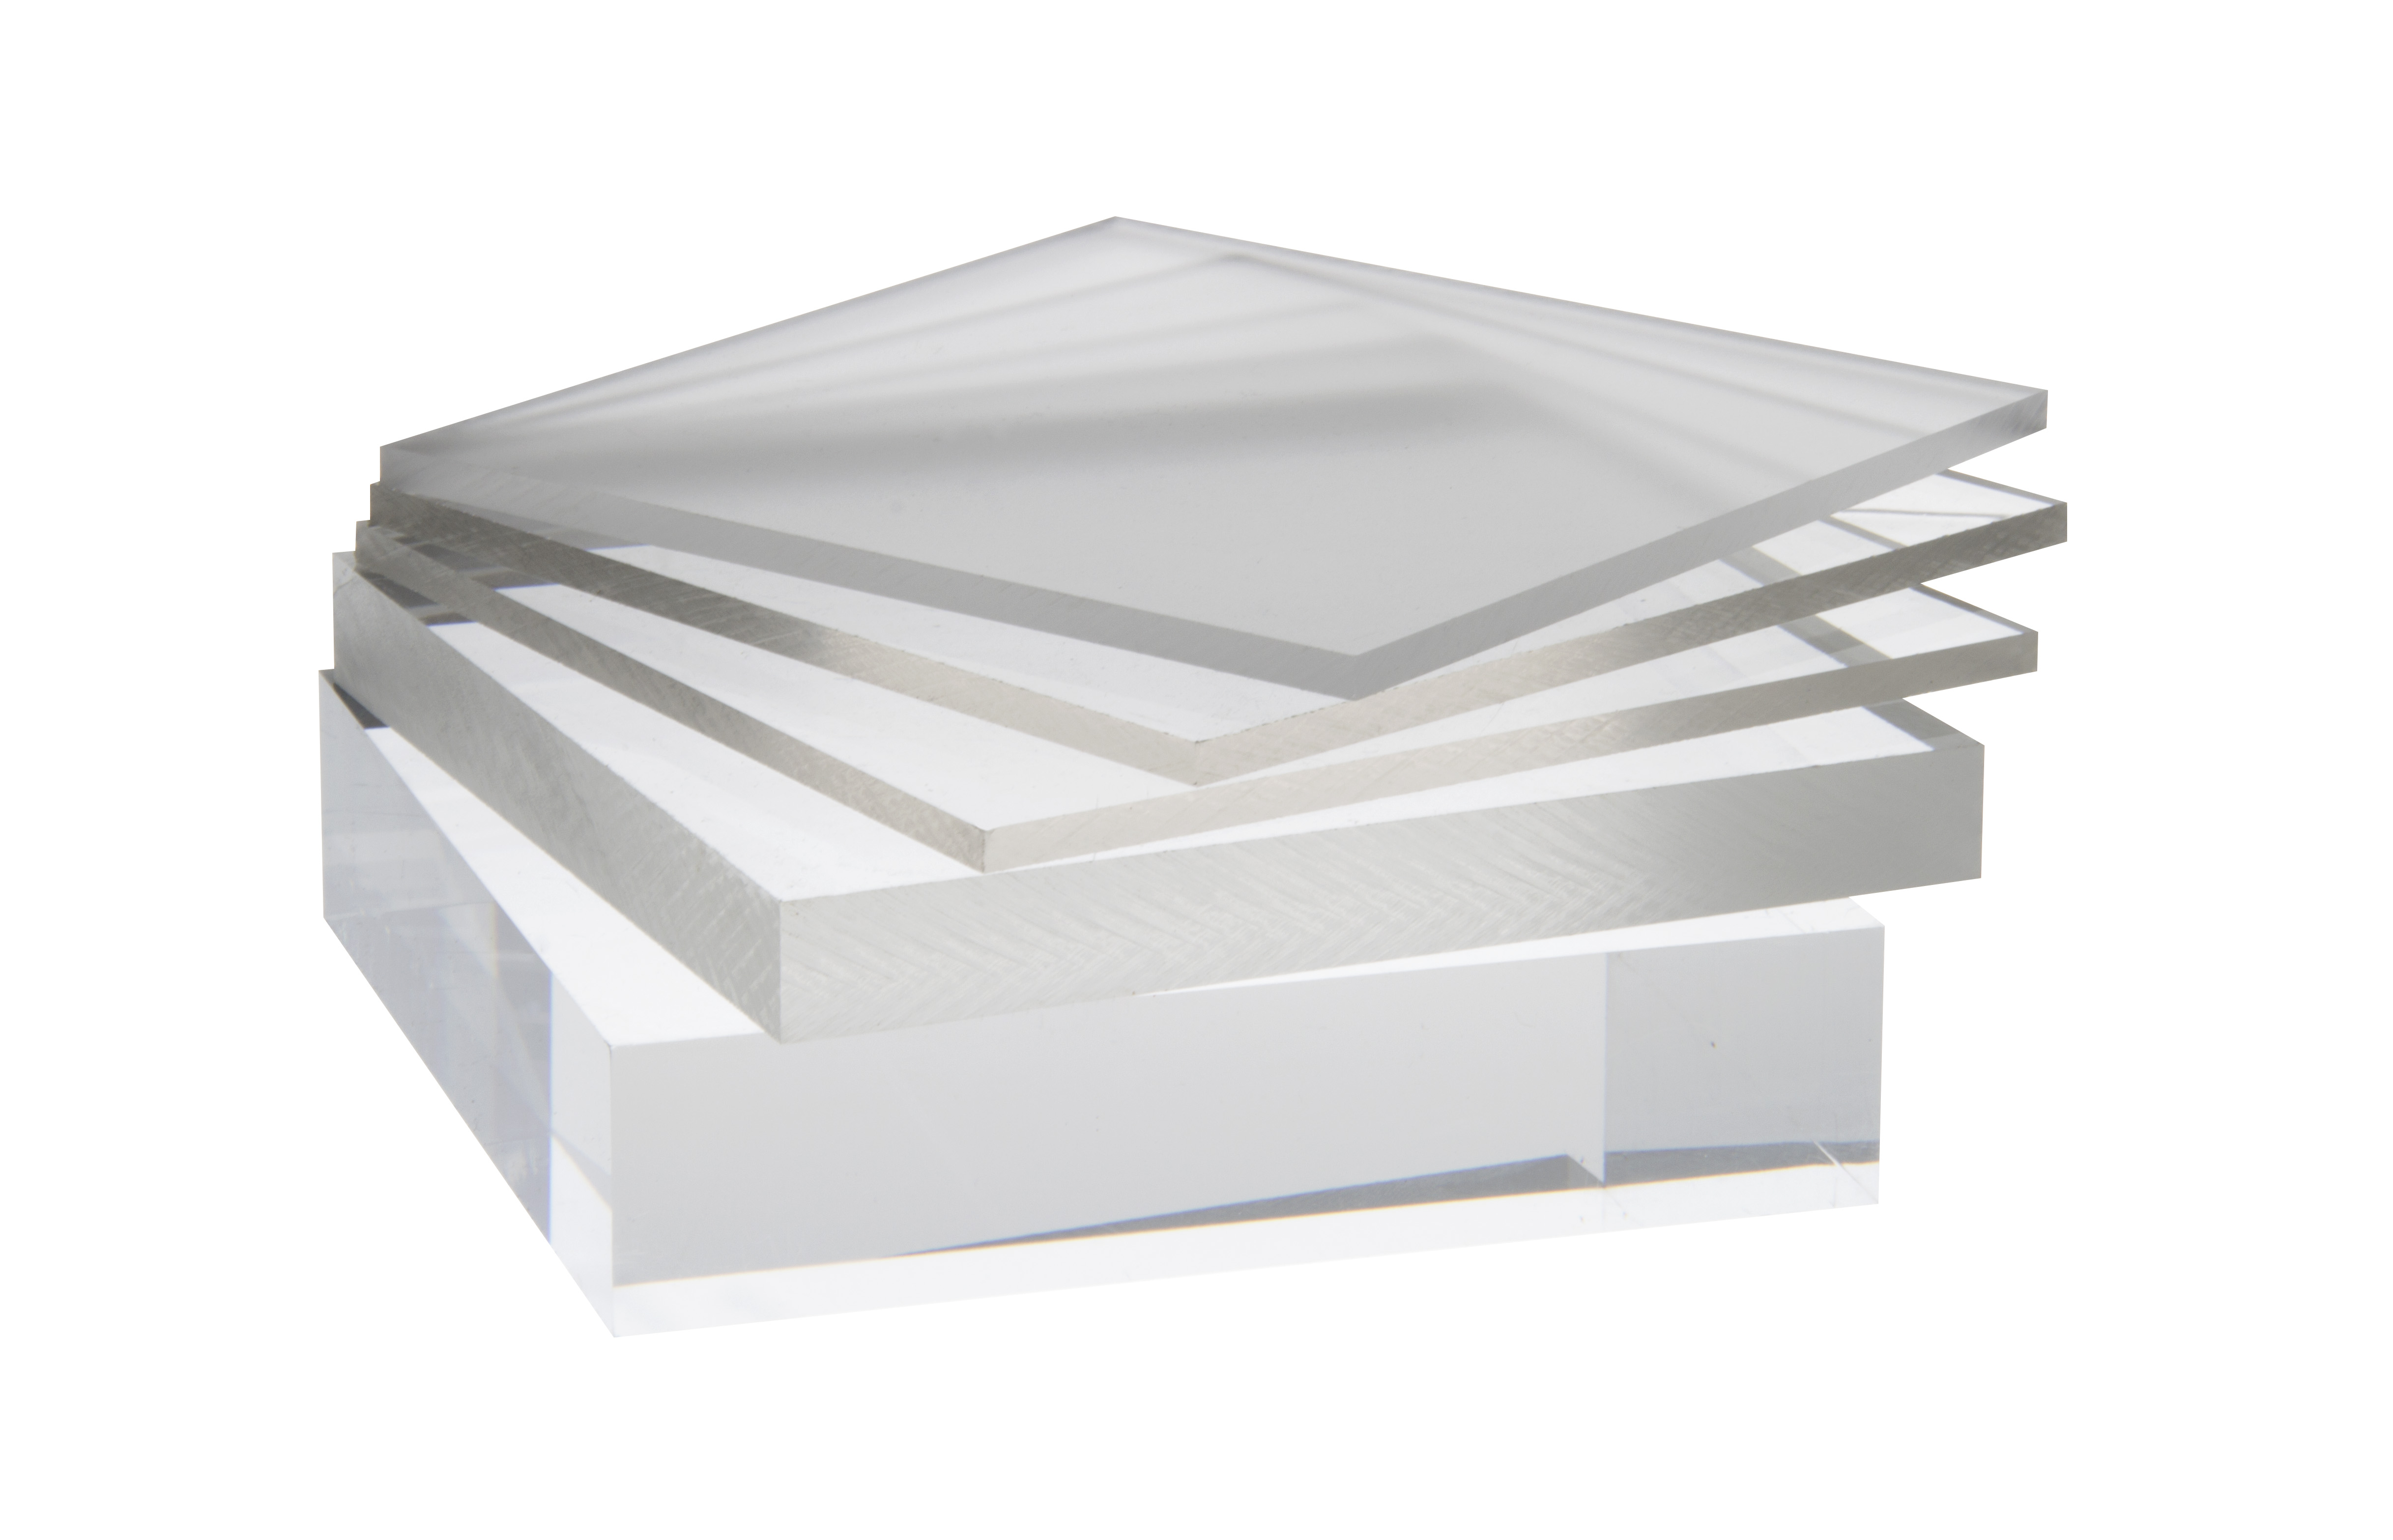 Plastic Sheet 1/4" x 24" x 48” White Smooth HDPE High Density Polyethylene